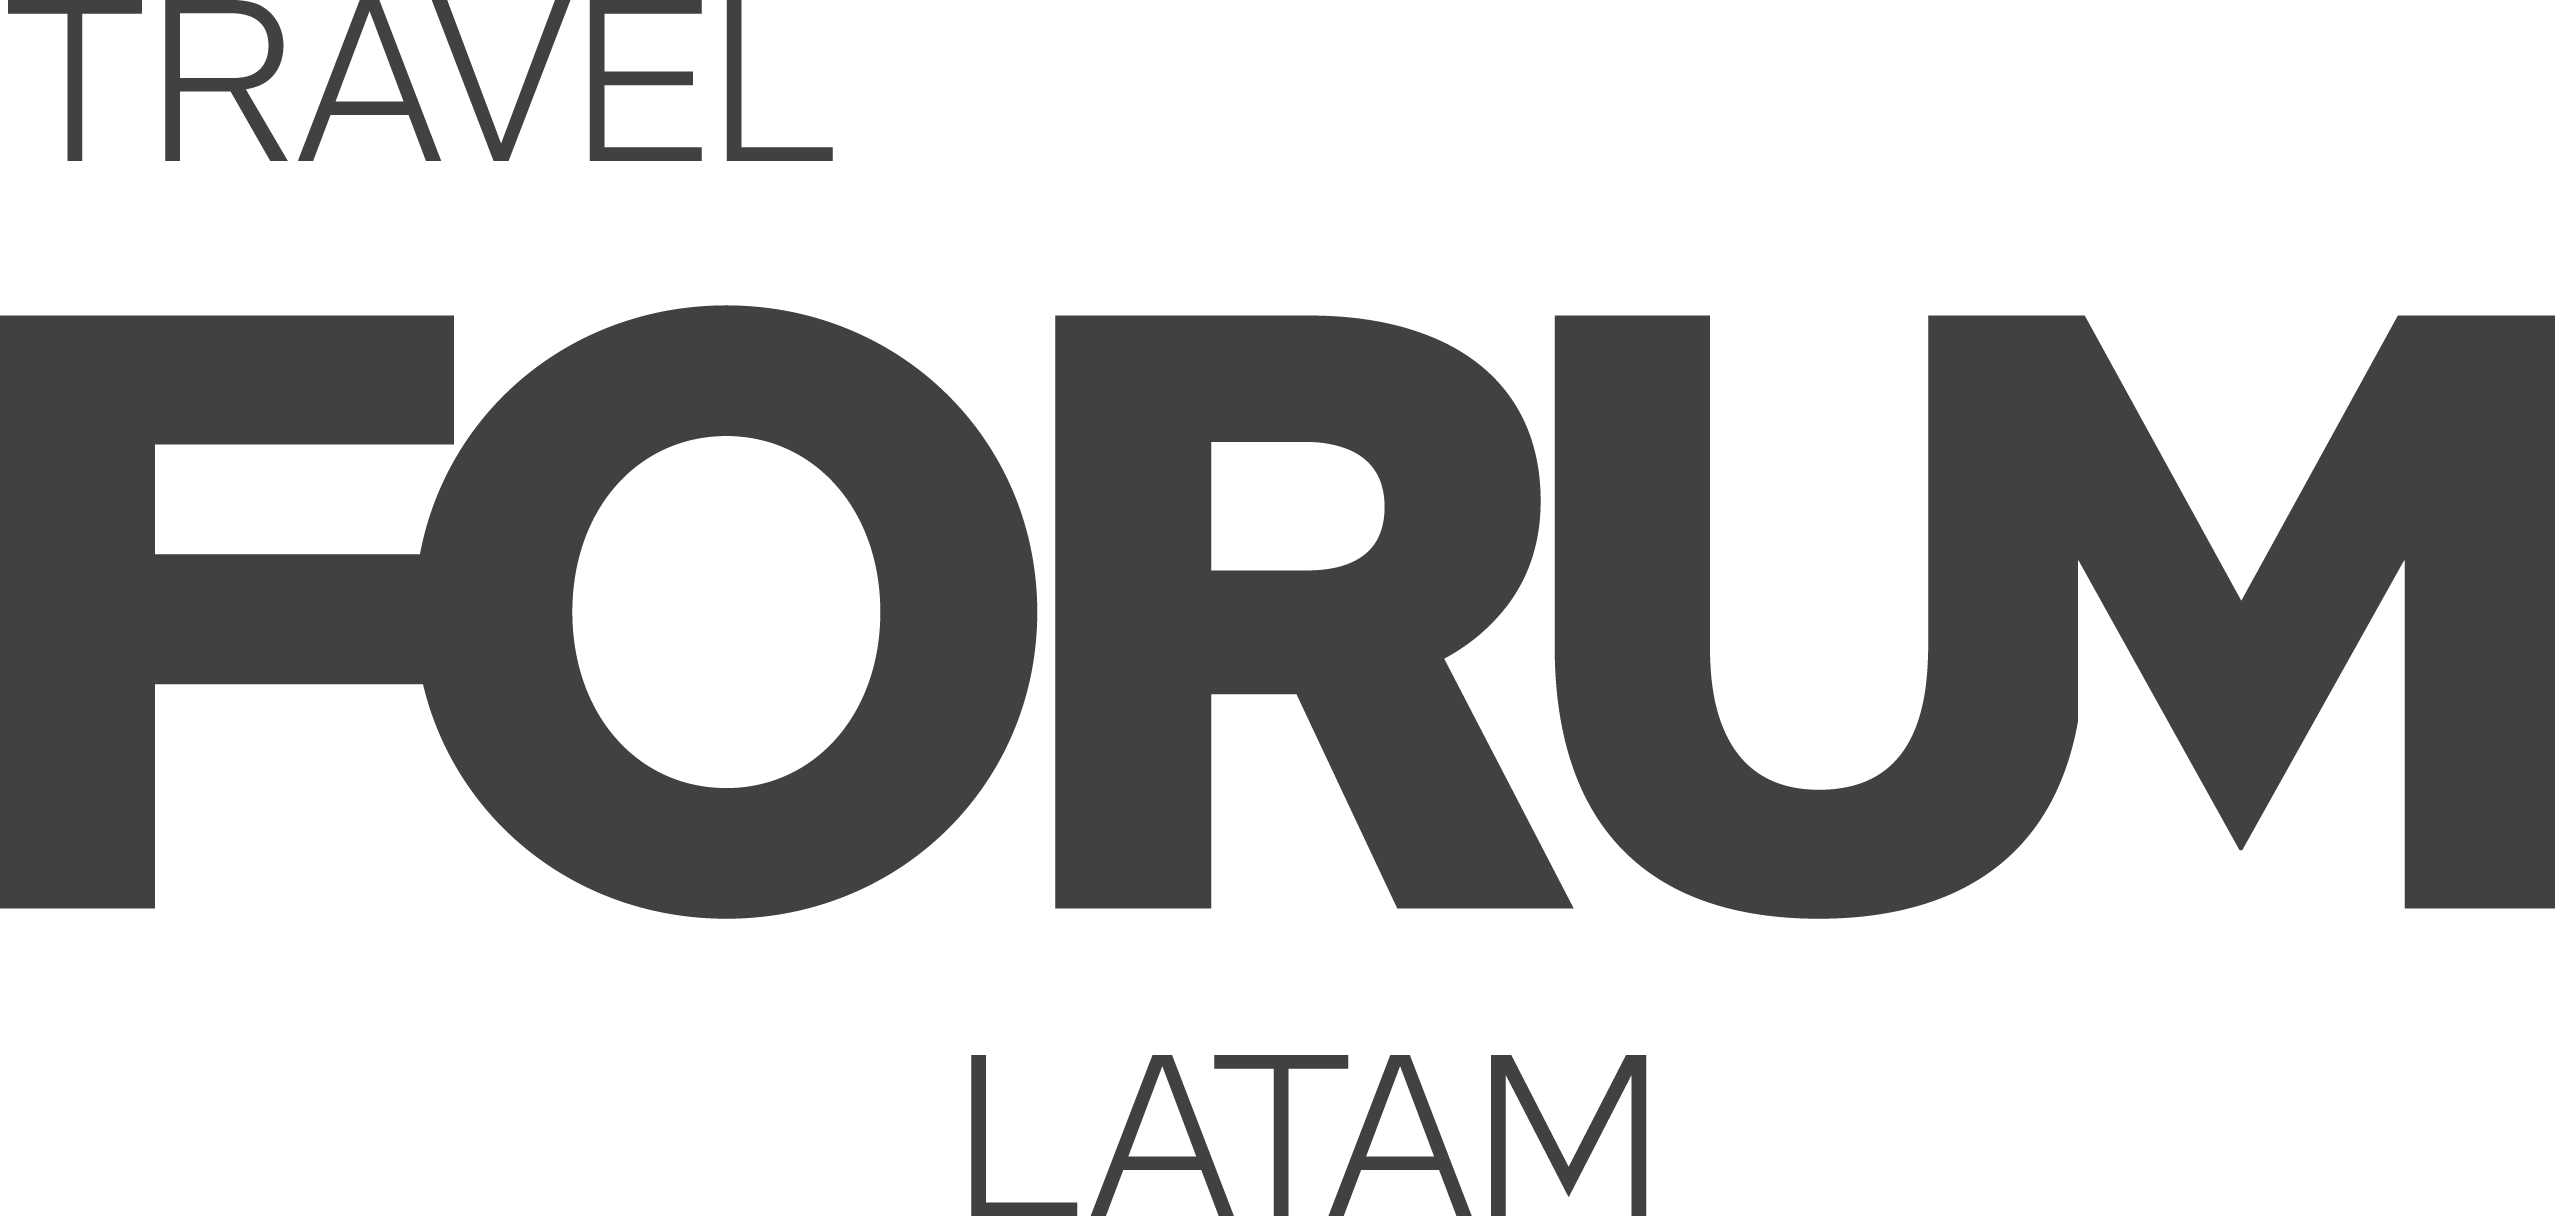 Turtech logo